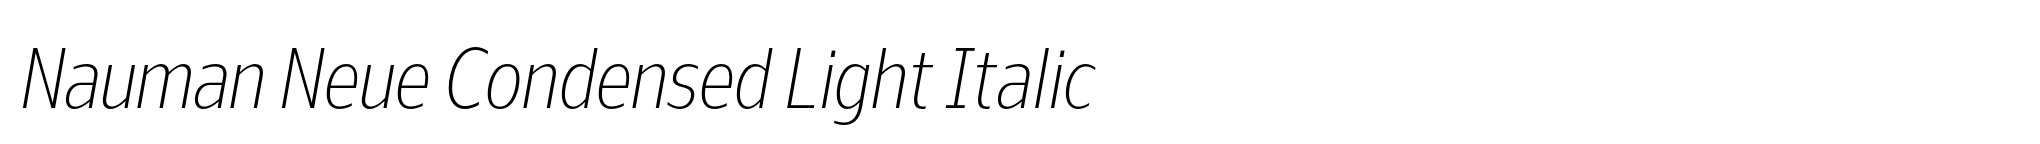 Nauman Neue Condensed Light Italic image